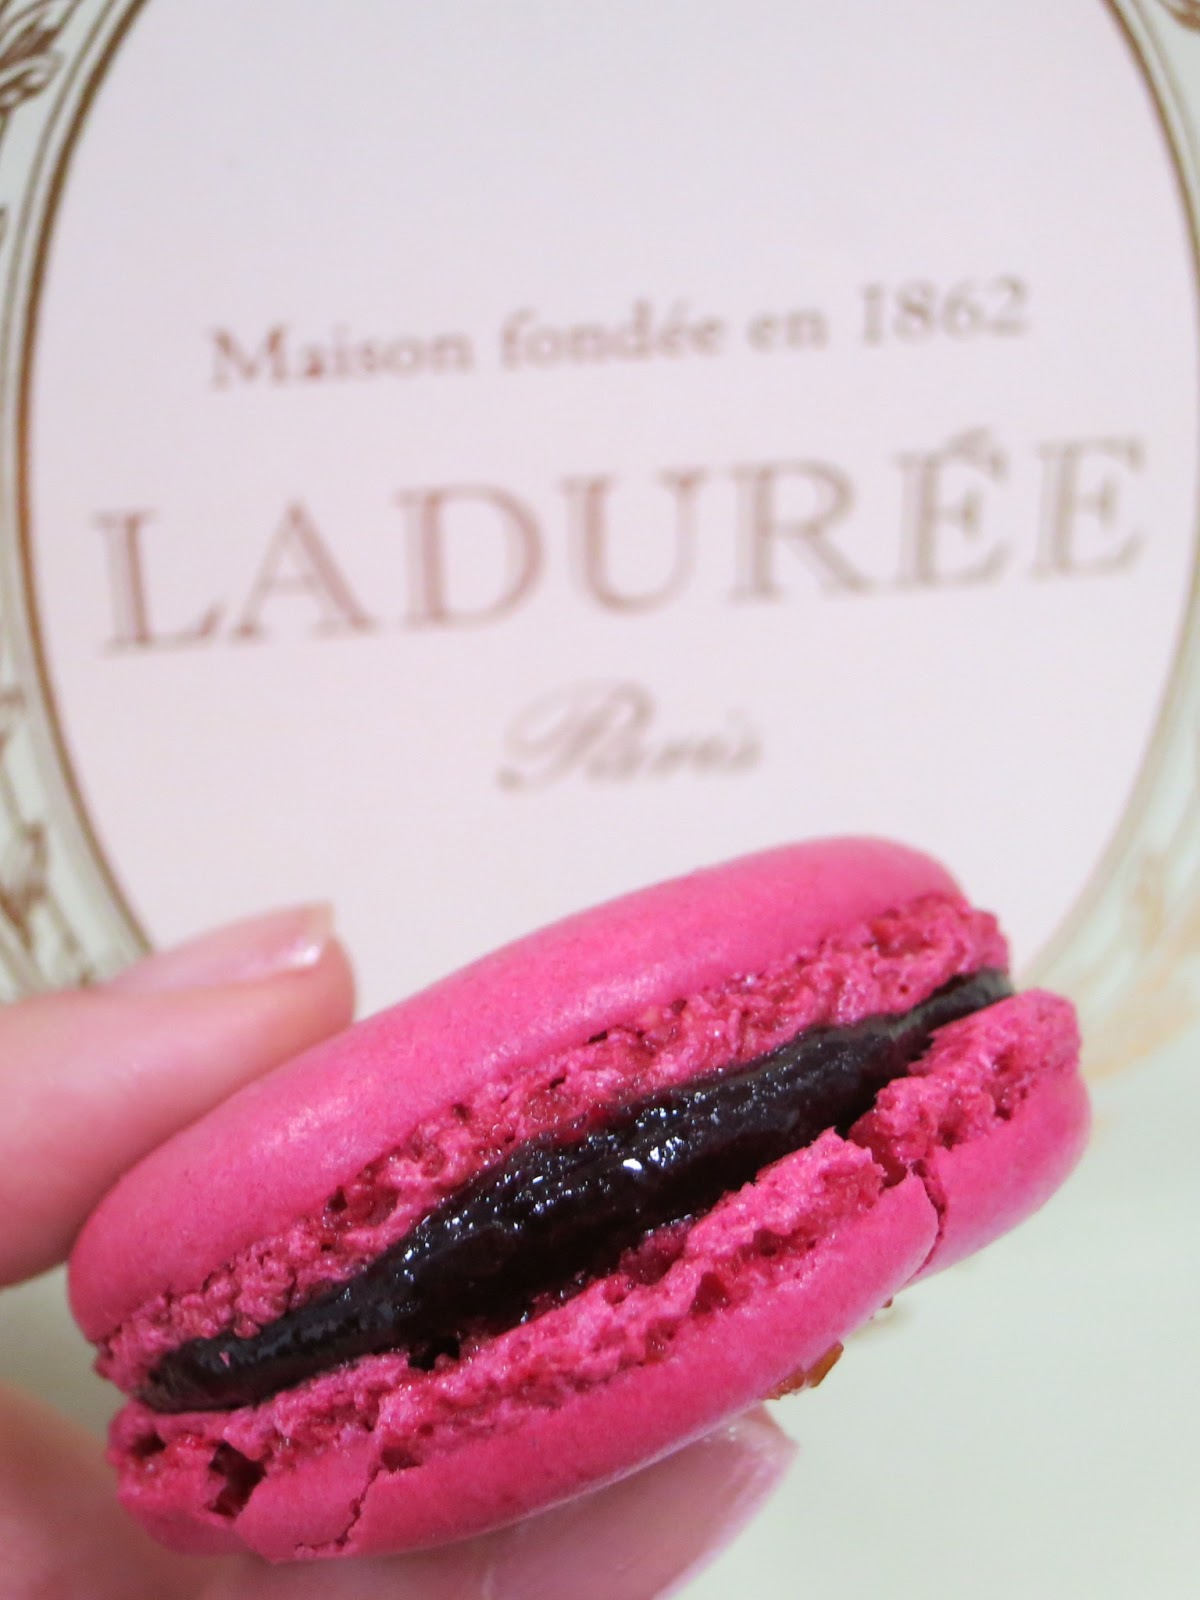 PinkyPiggu: Renowned Ladurée Macarons is now in Singapore!